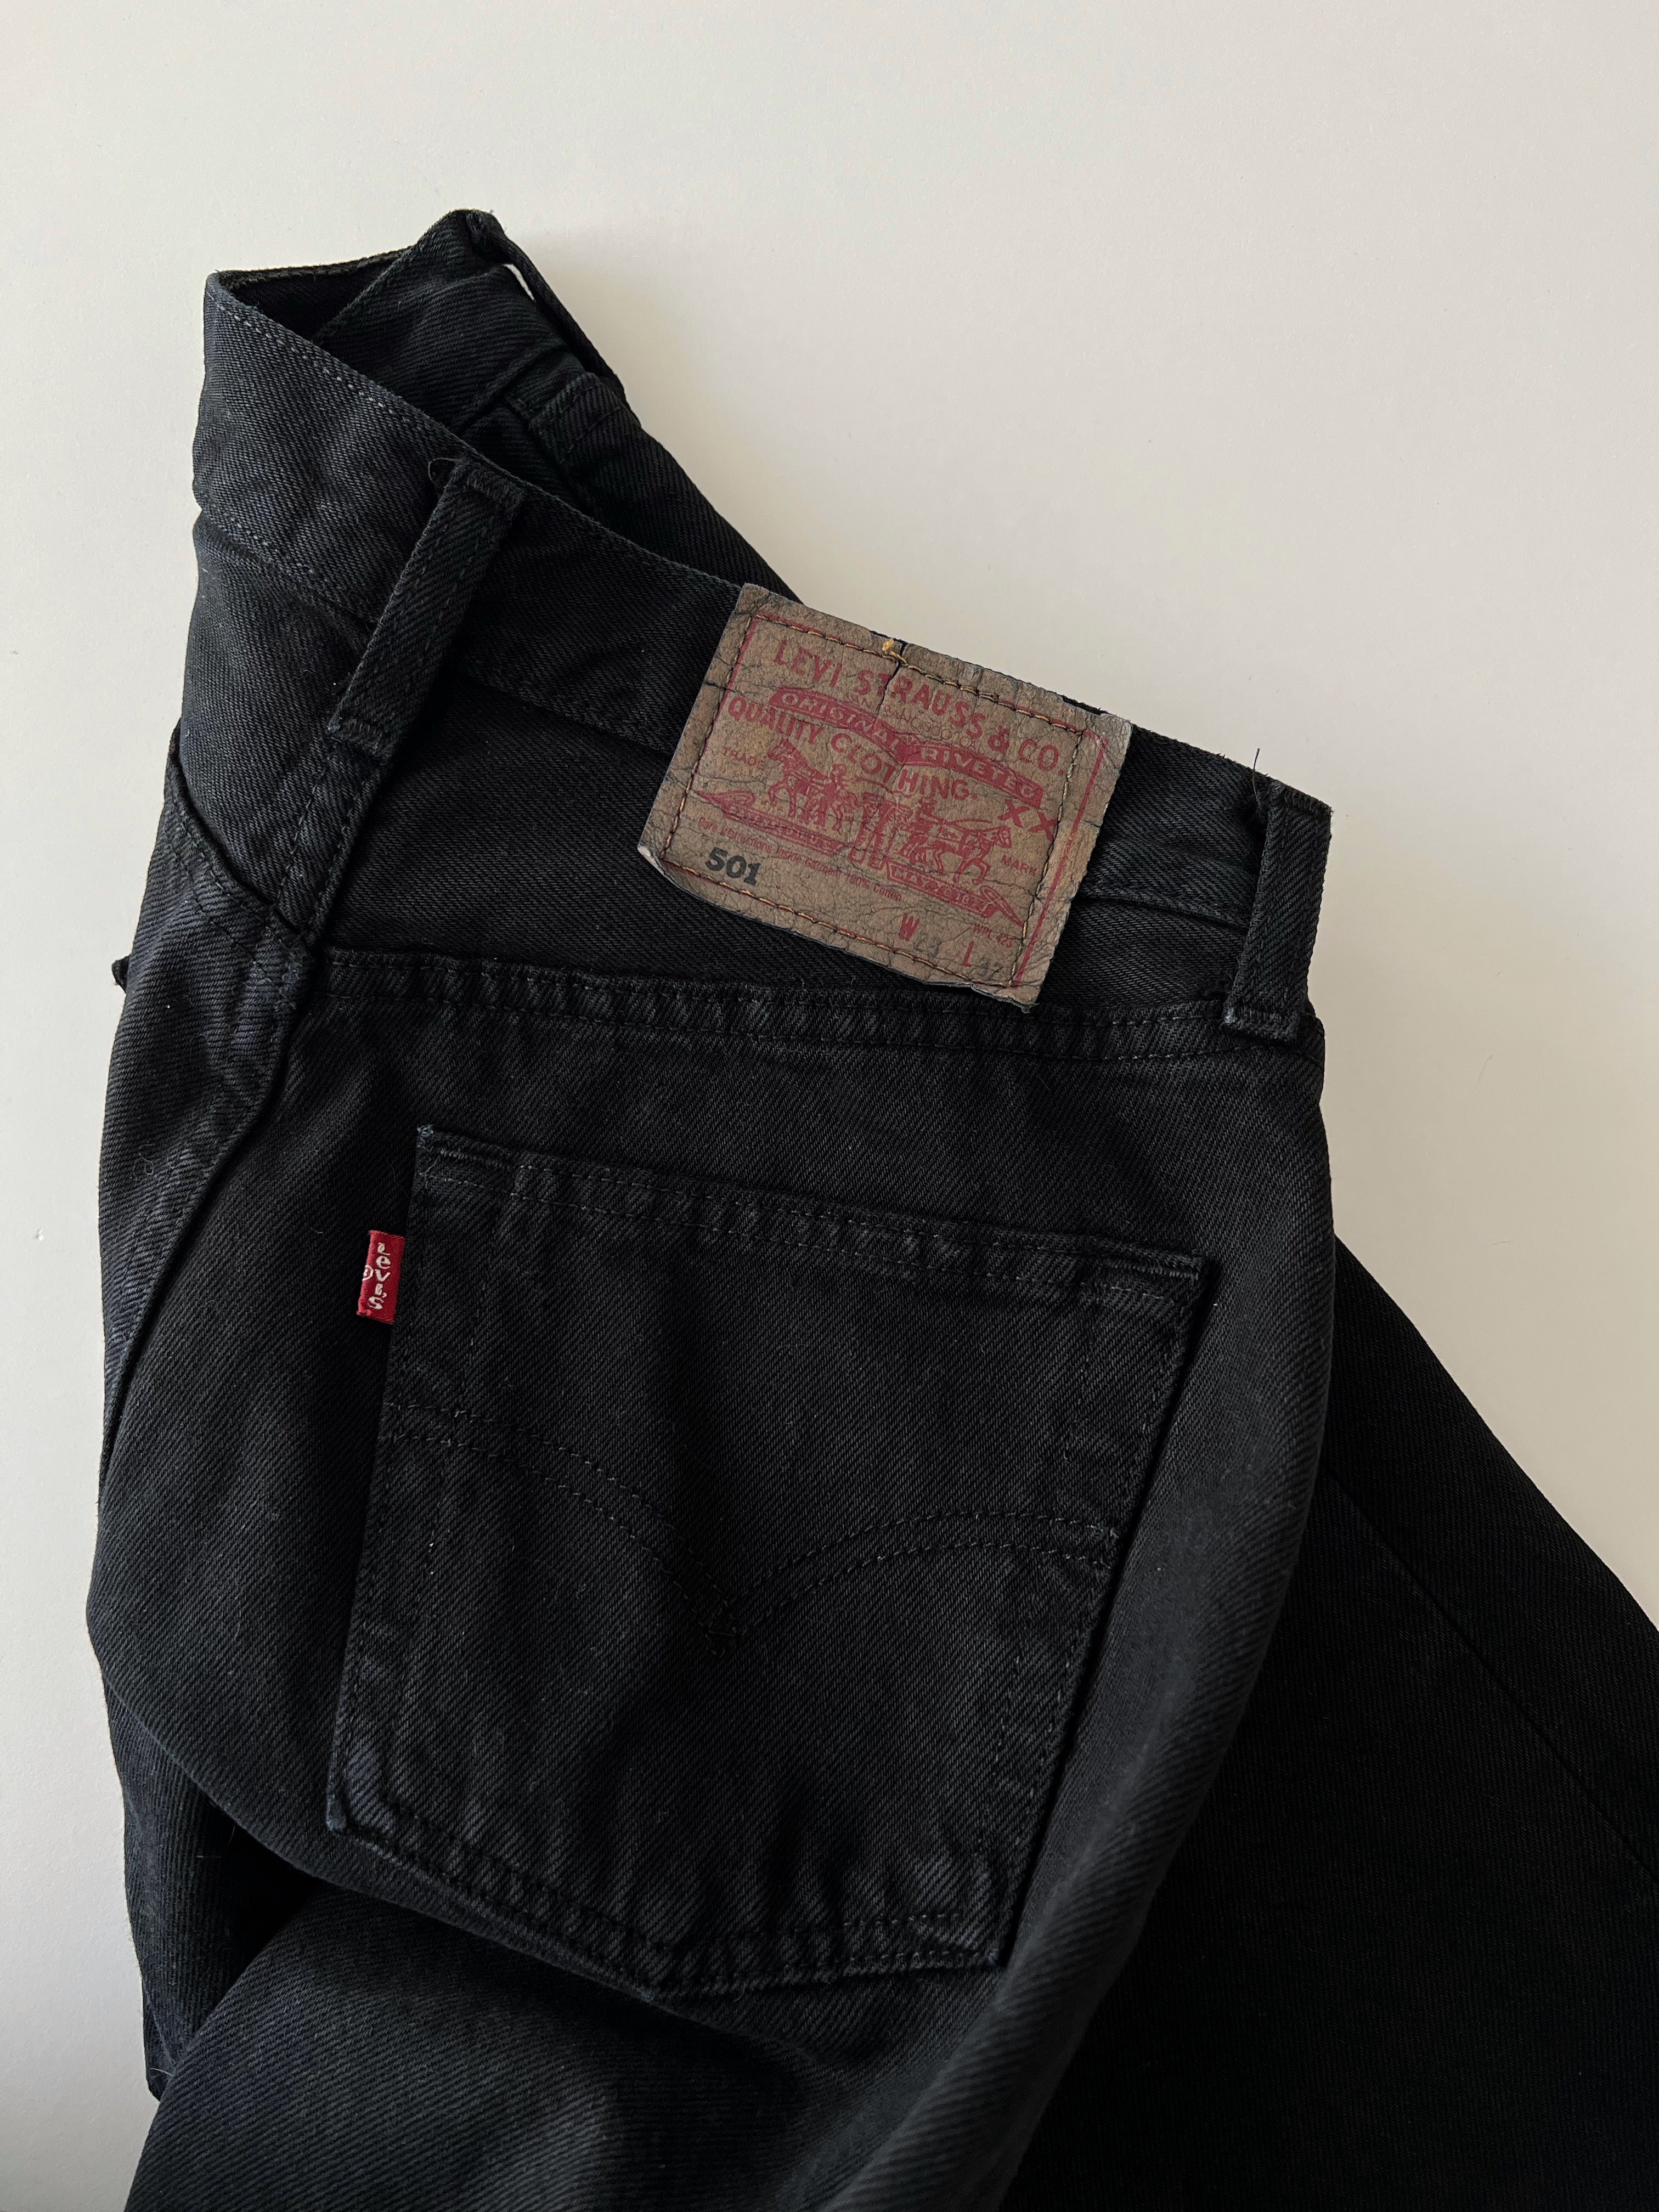 Levi's 501 black jeans